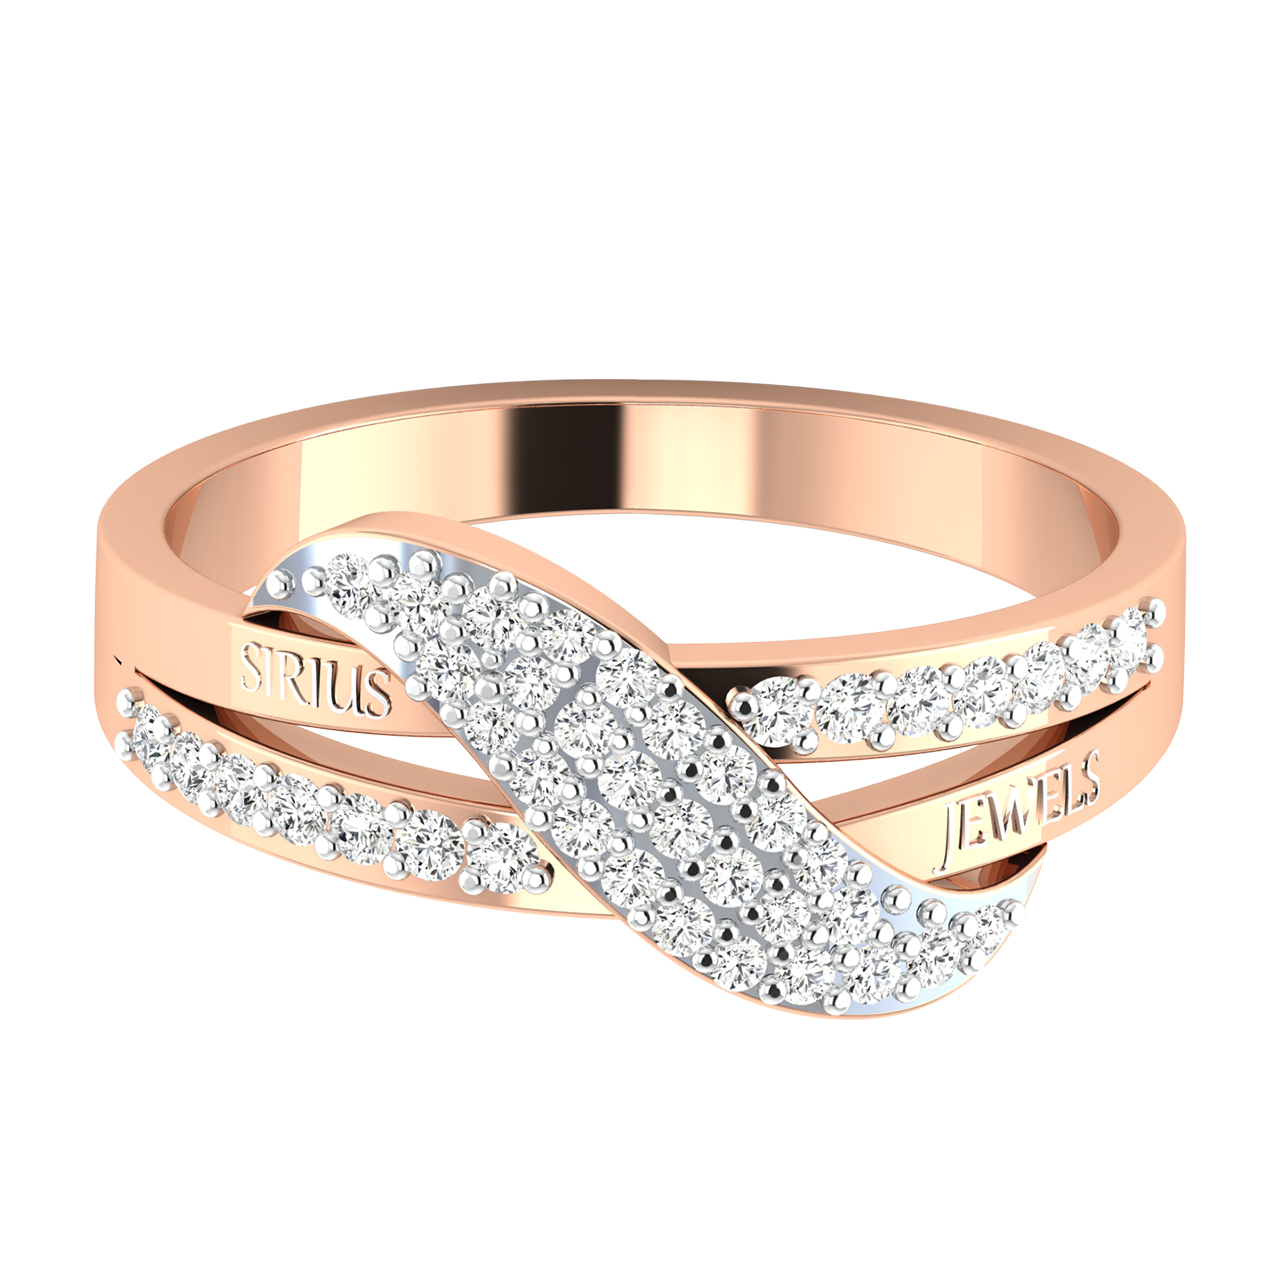 The Customized Name Diamond Ring